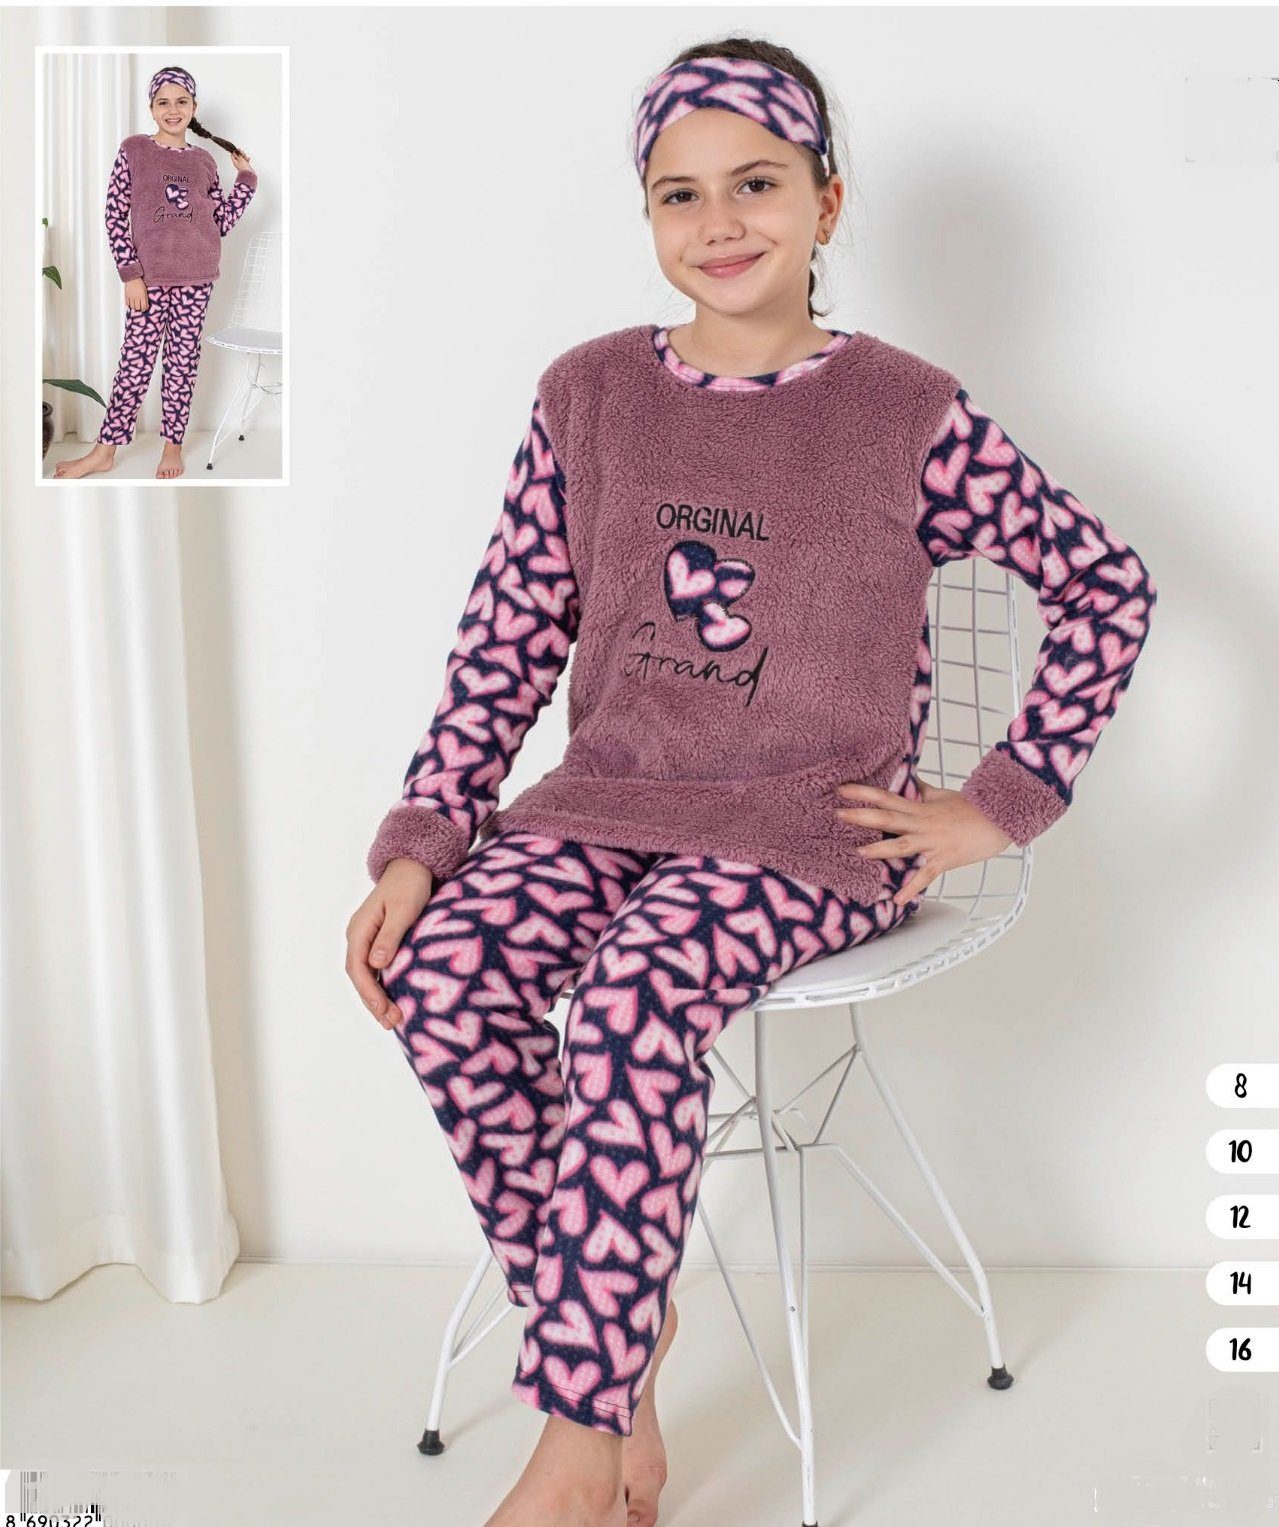 Selef Creation Pyjama Schlafanzug Mädchen Kinder Pyjama lang GR. 8-16 Jahre